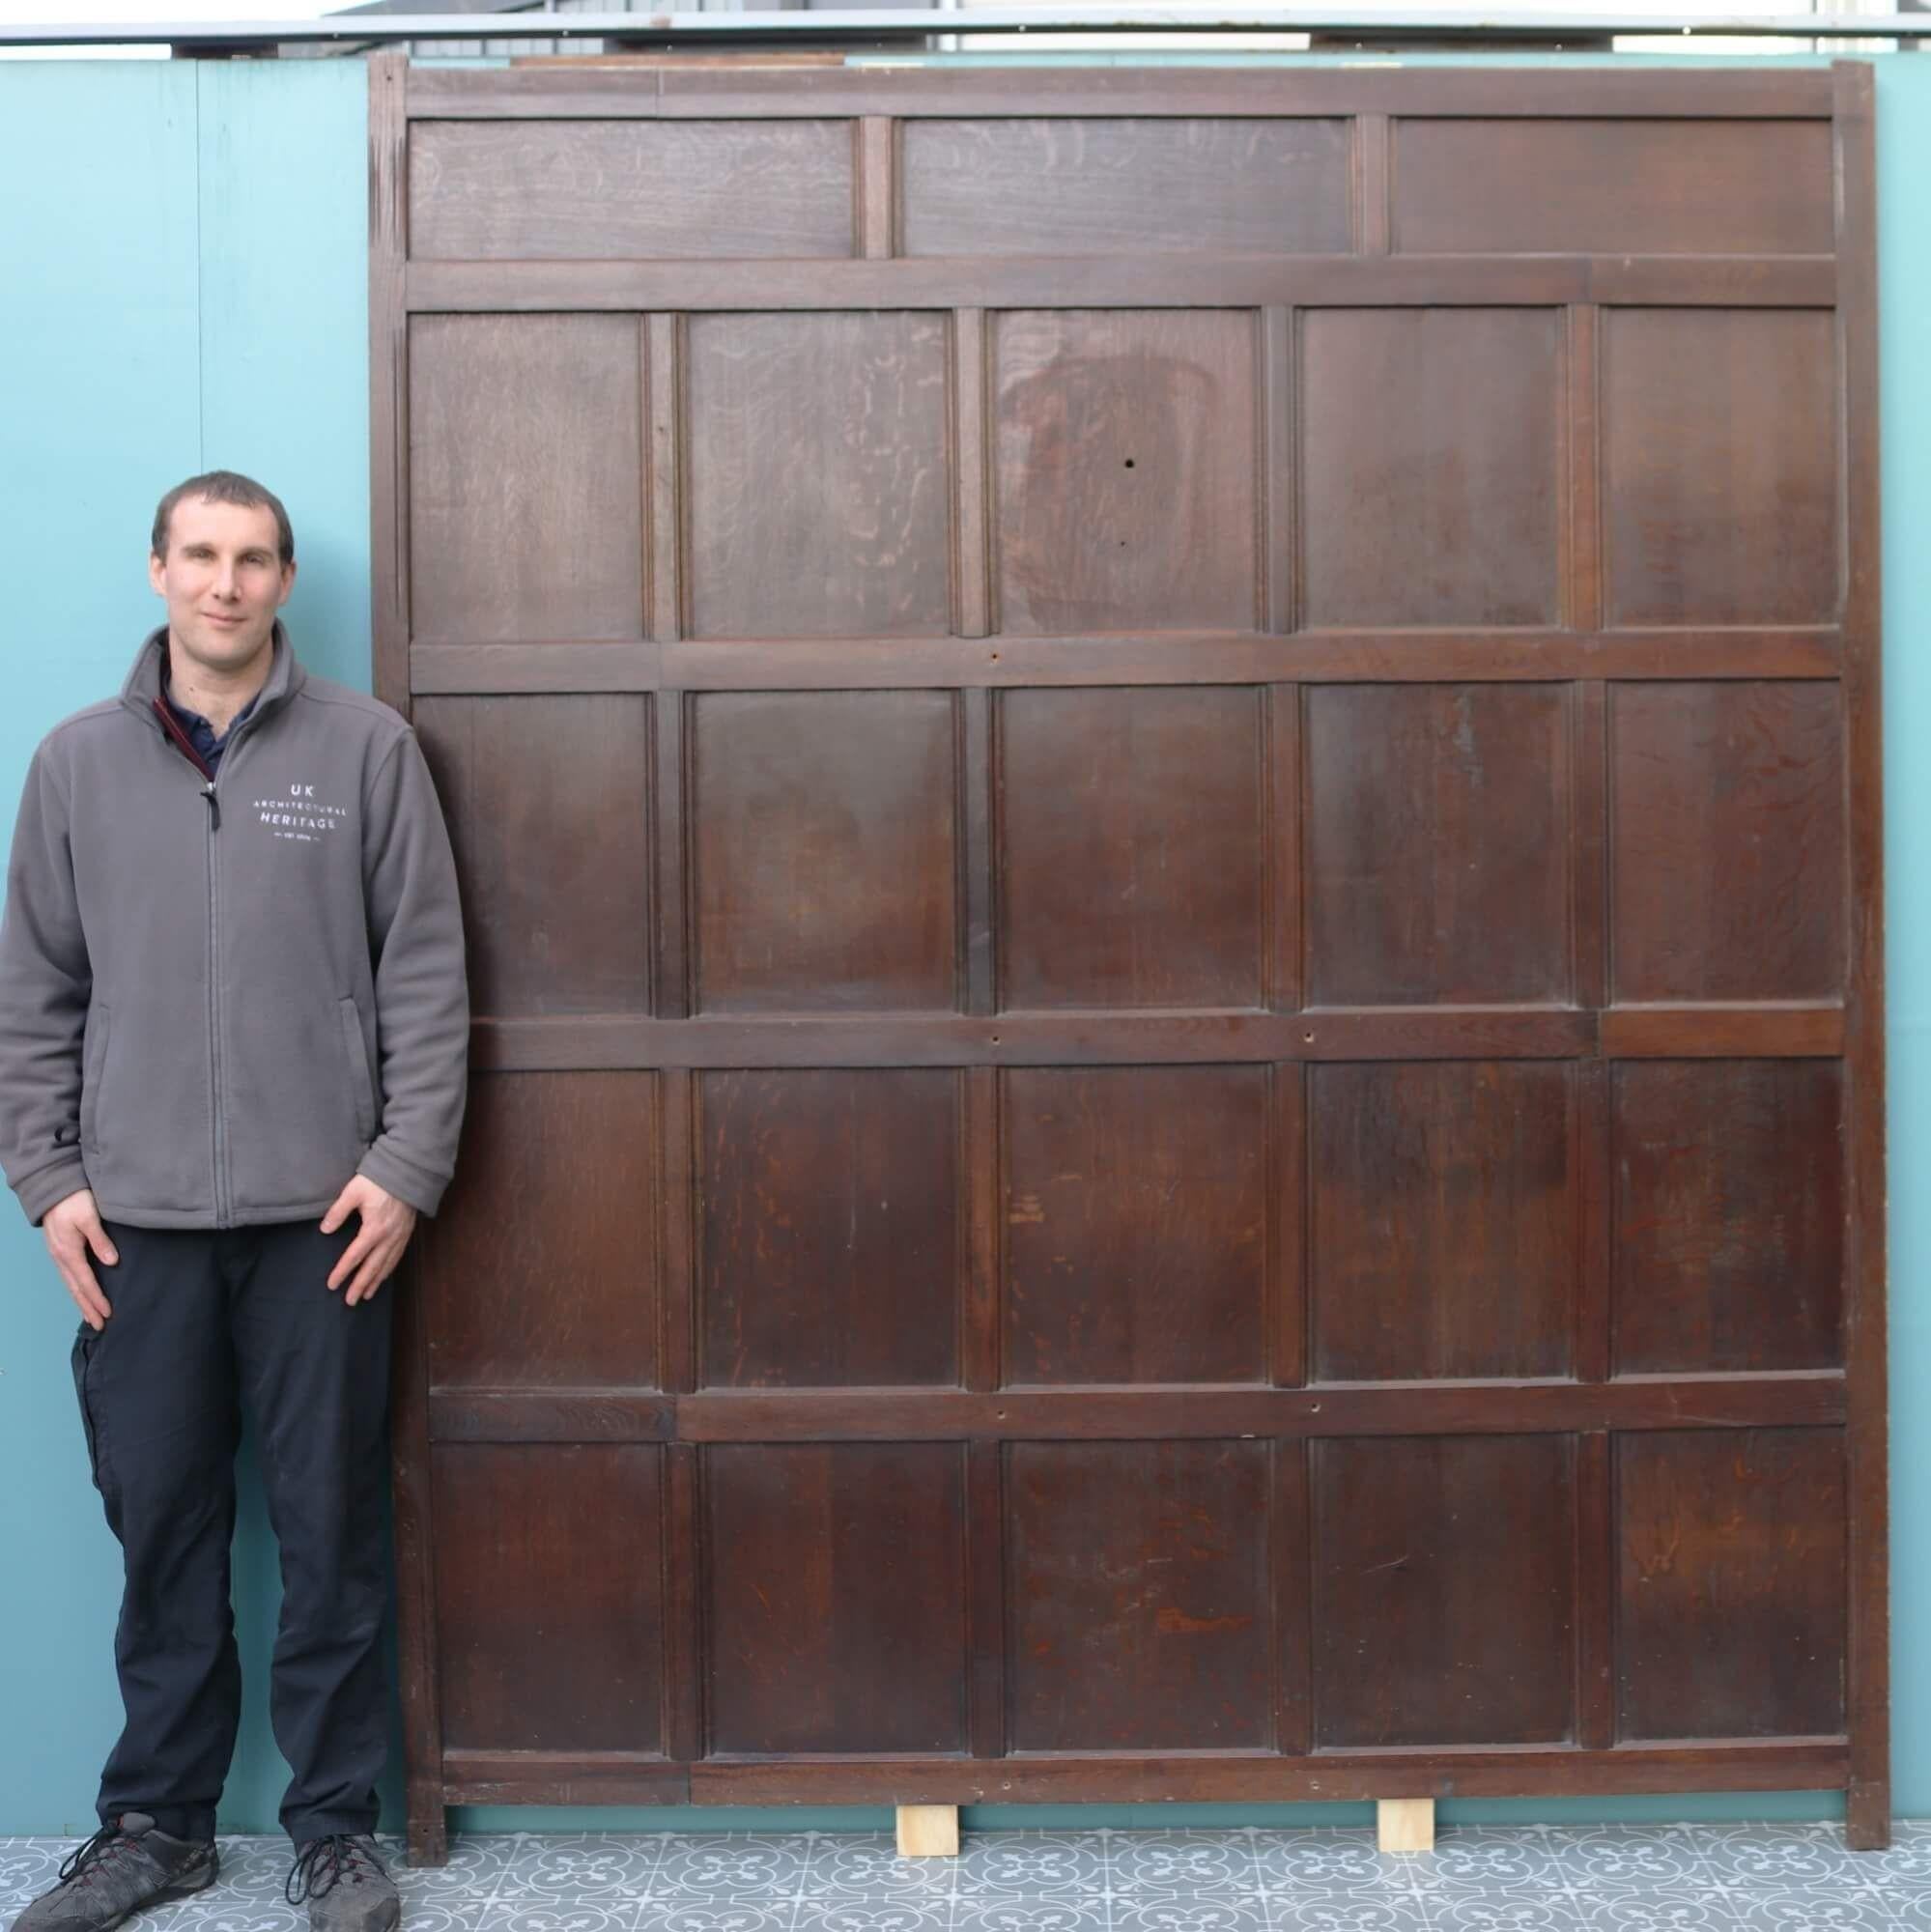 Edwardian Run of Reclaimed Full Height Solid Oak Wall Paneling